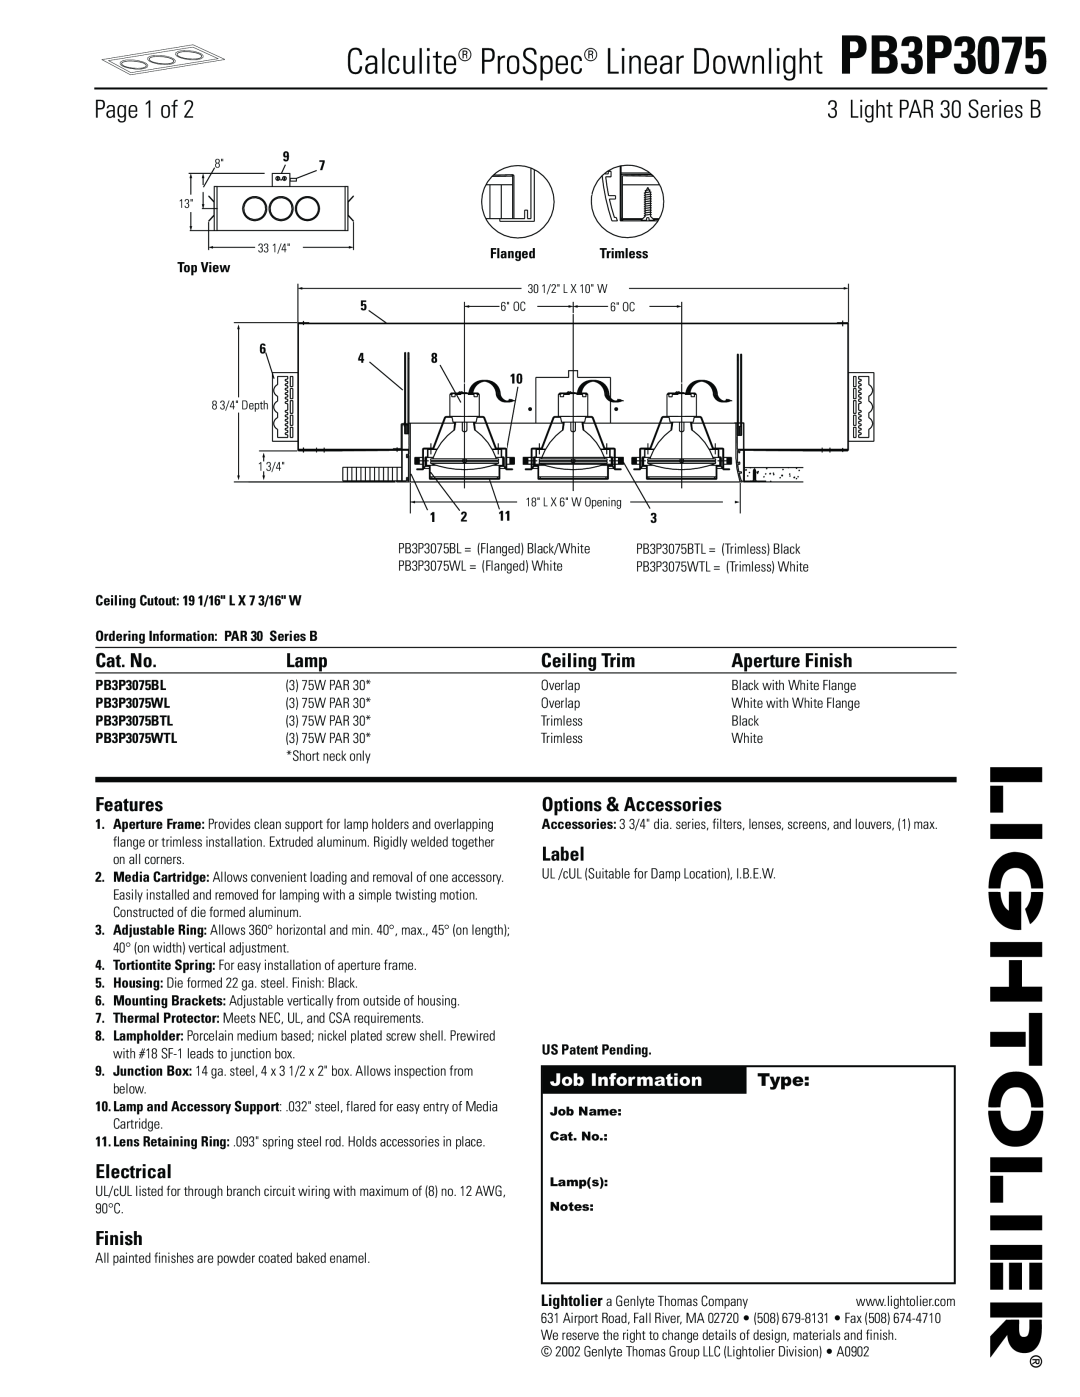 Lightolier manual Calculite ProSpec Linear Downlight PB3P3075, Page 1 of, Light PAR 30 Series B, Cat. No, Lamp, Finish 